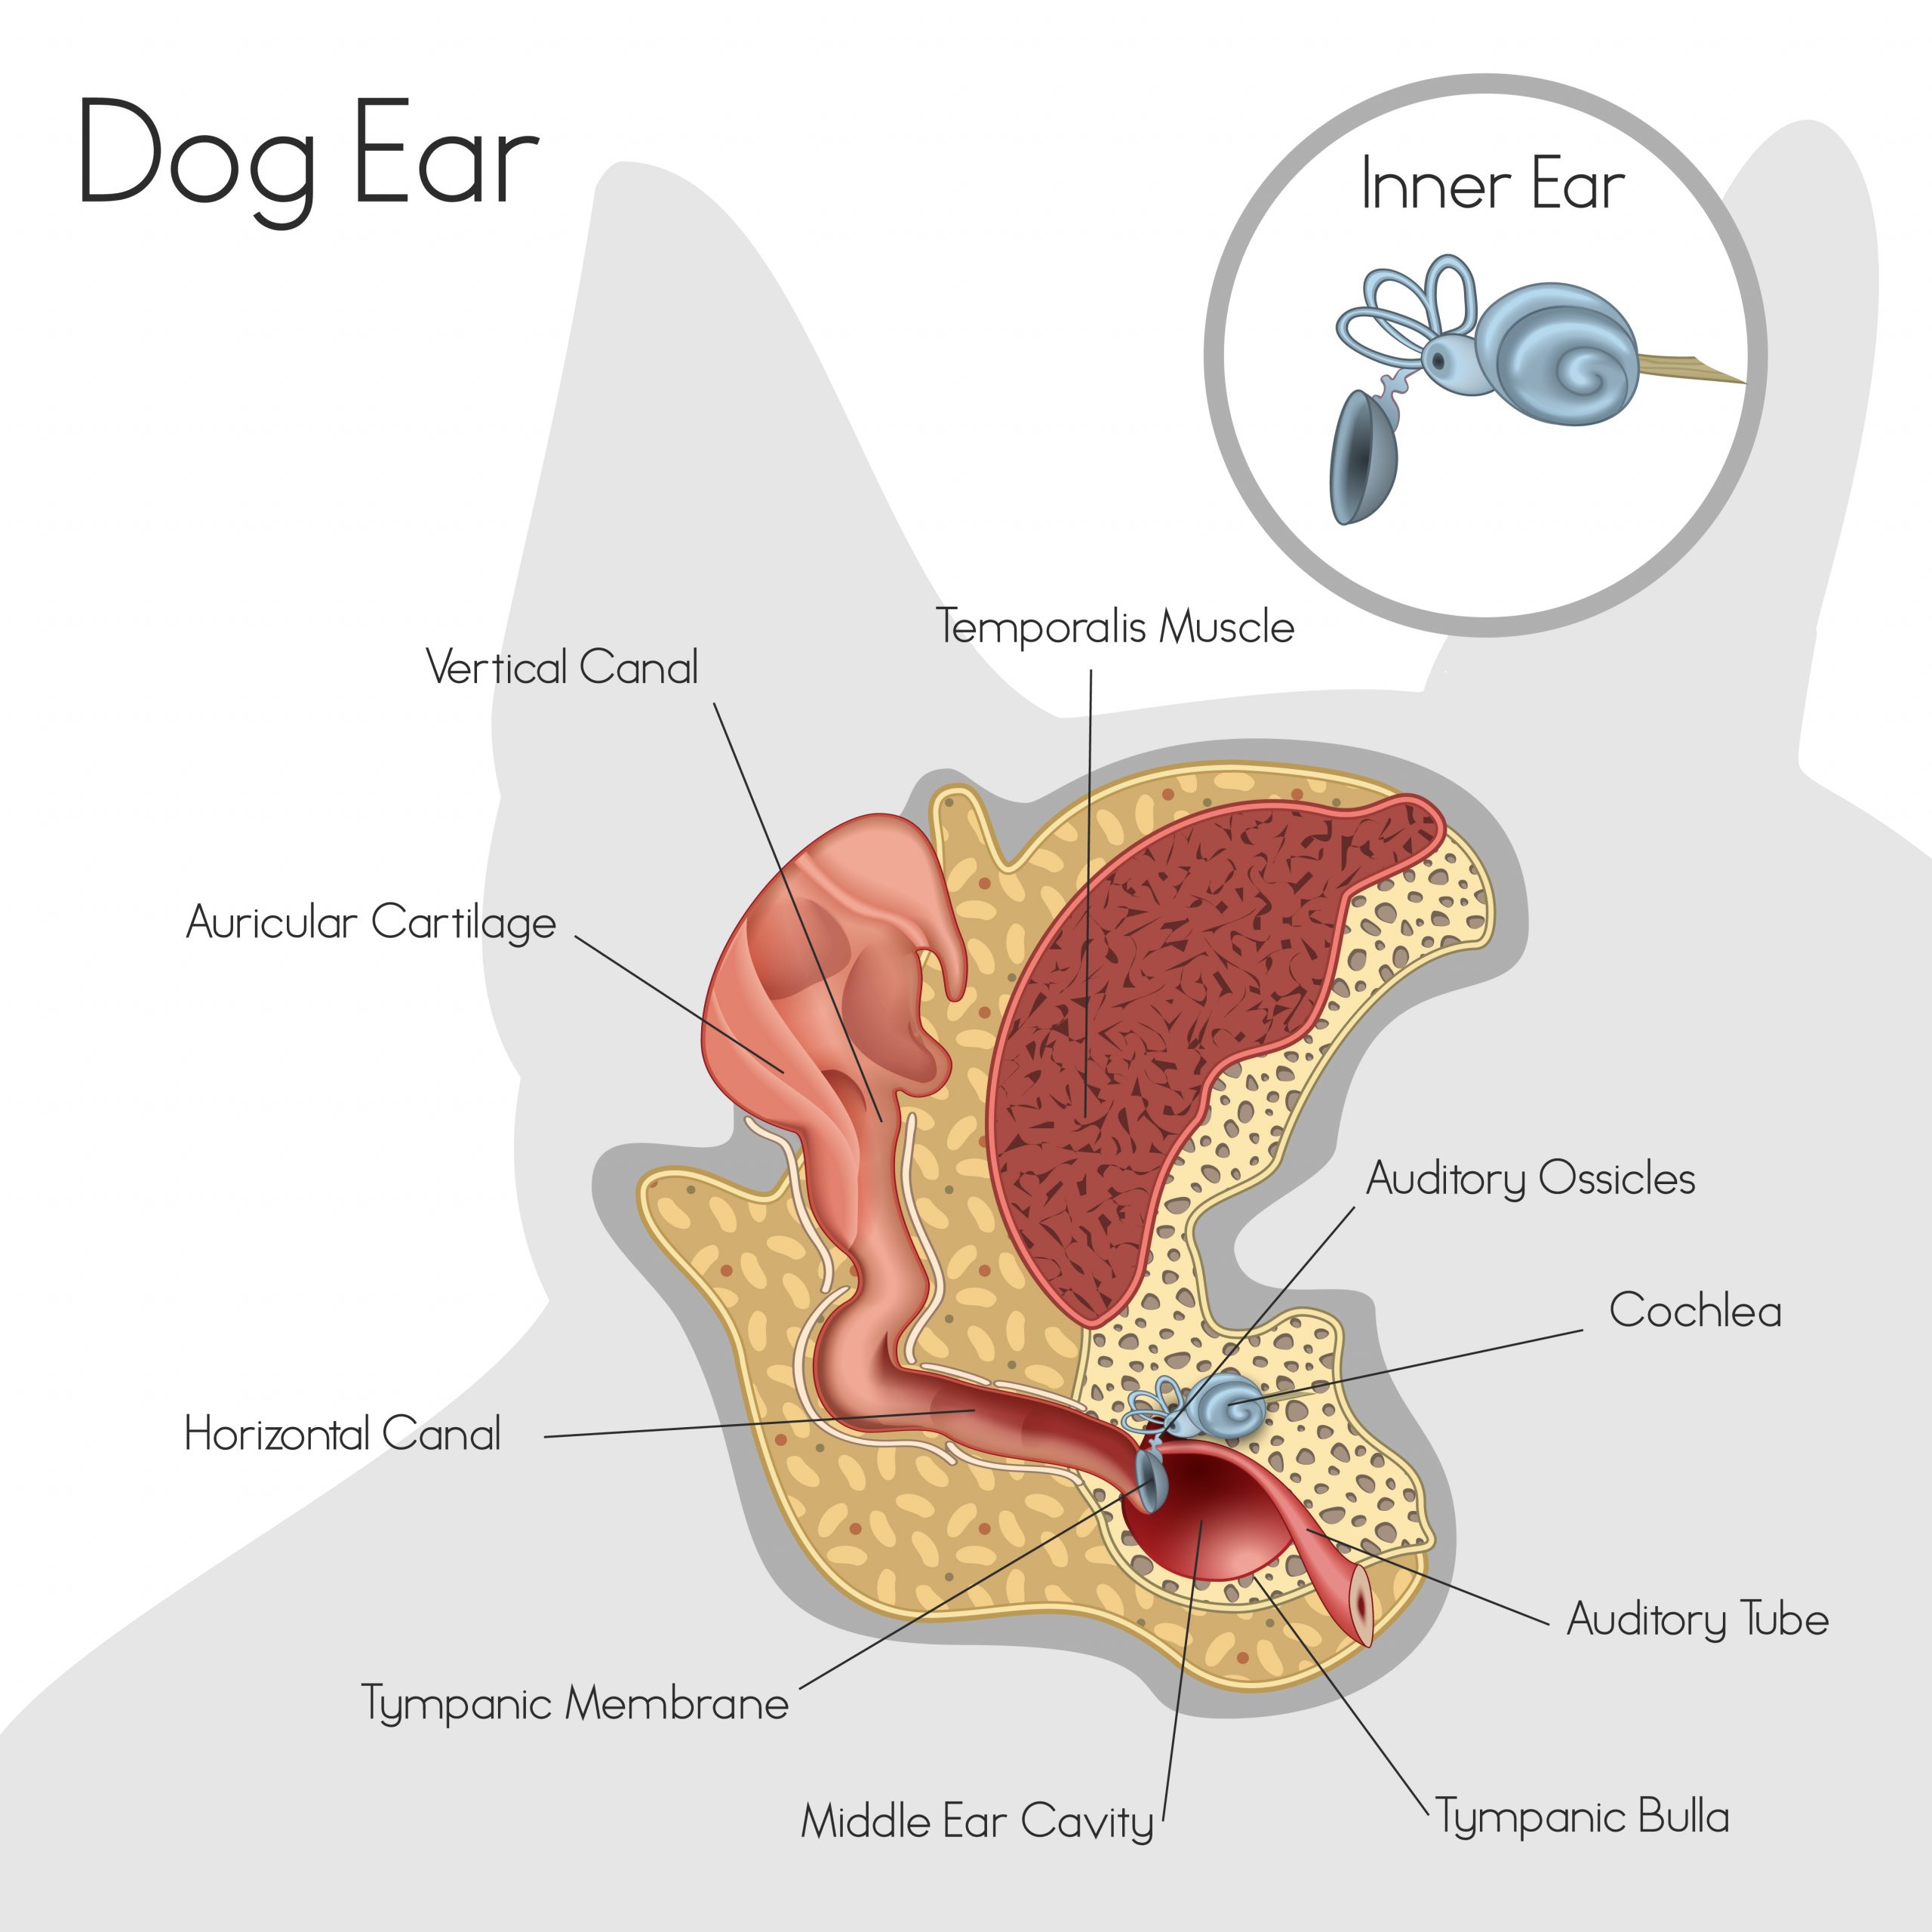 anatomical illustration of a dog’s ear